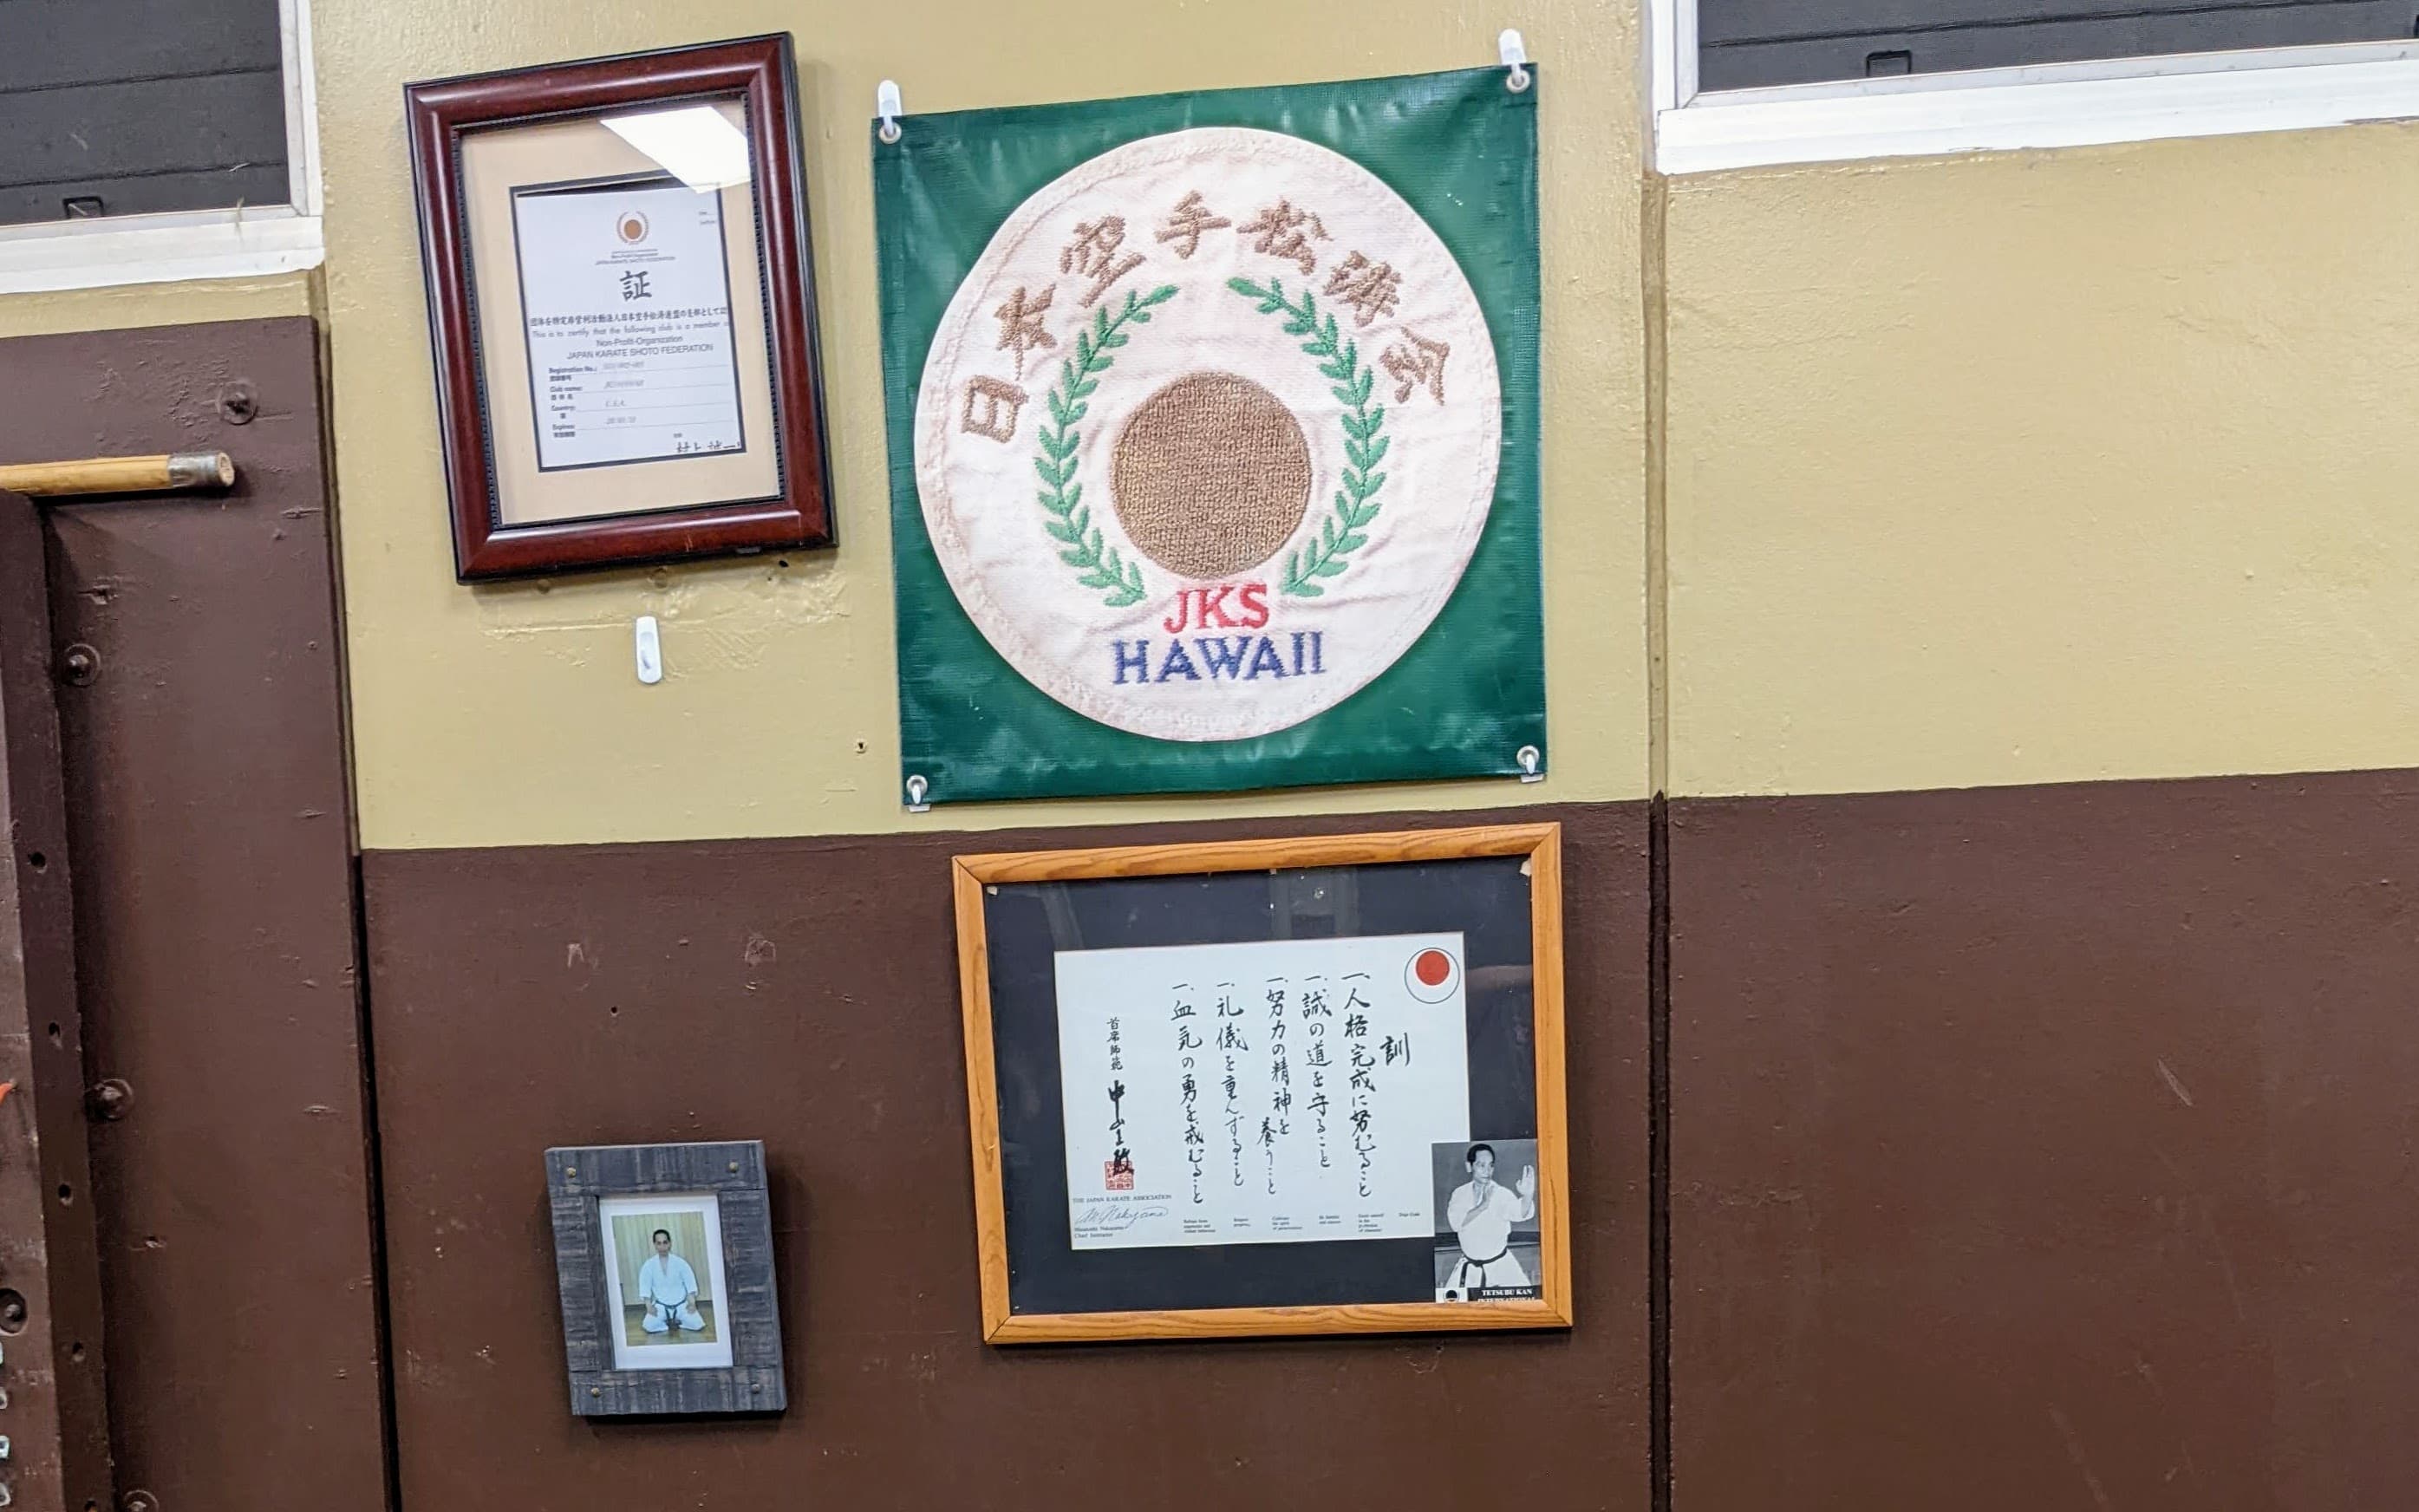 Shotokan karate classes resume at Lahaina Civic Center